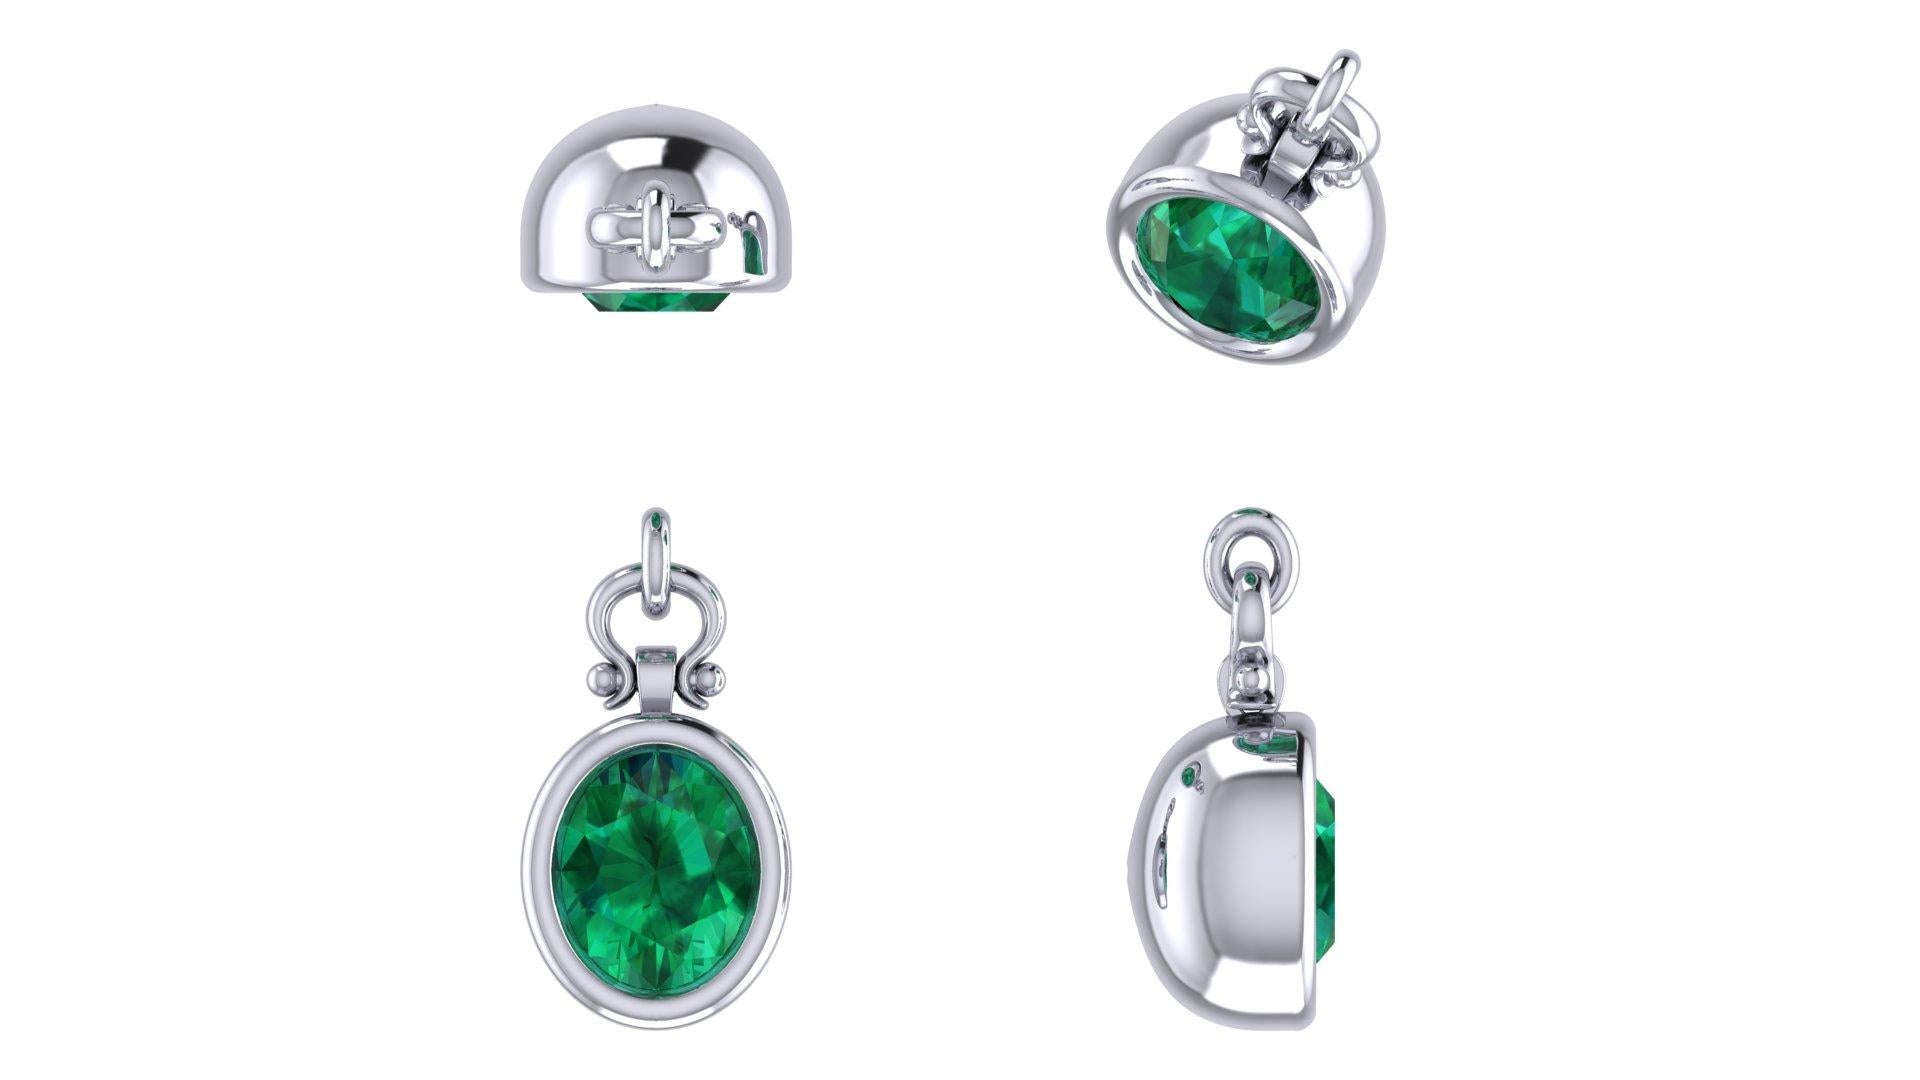 3.04 Carat Oval Cut Emerald Pendant Necklace in 18k For Sale 1